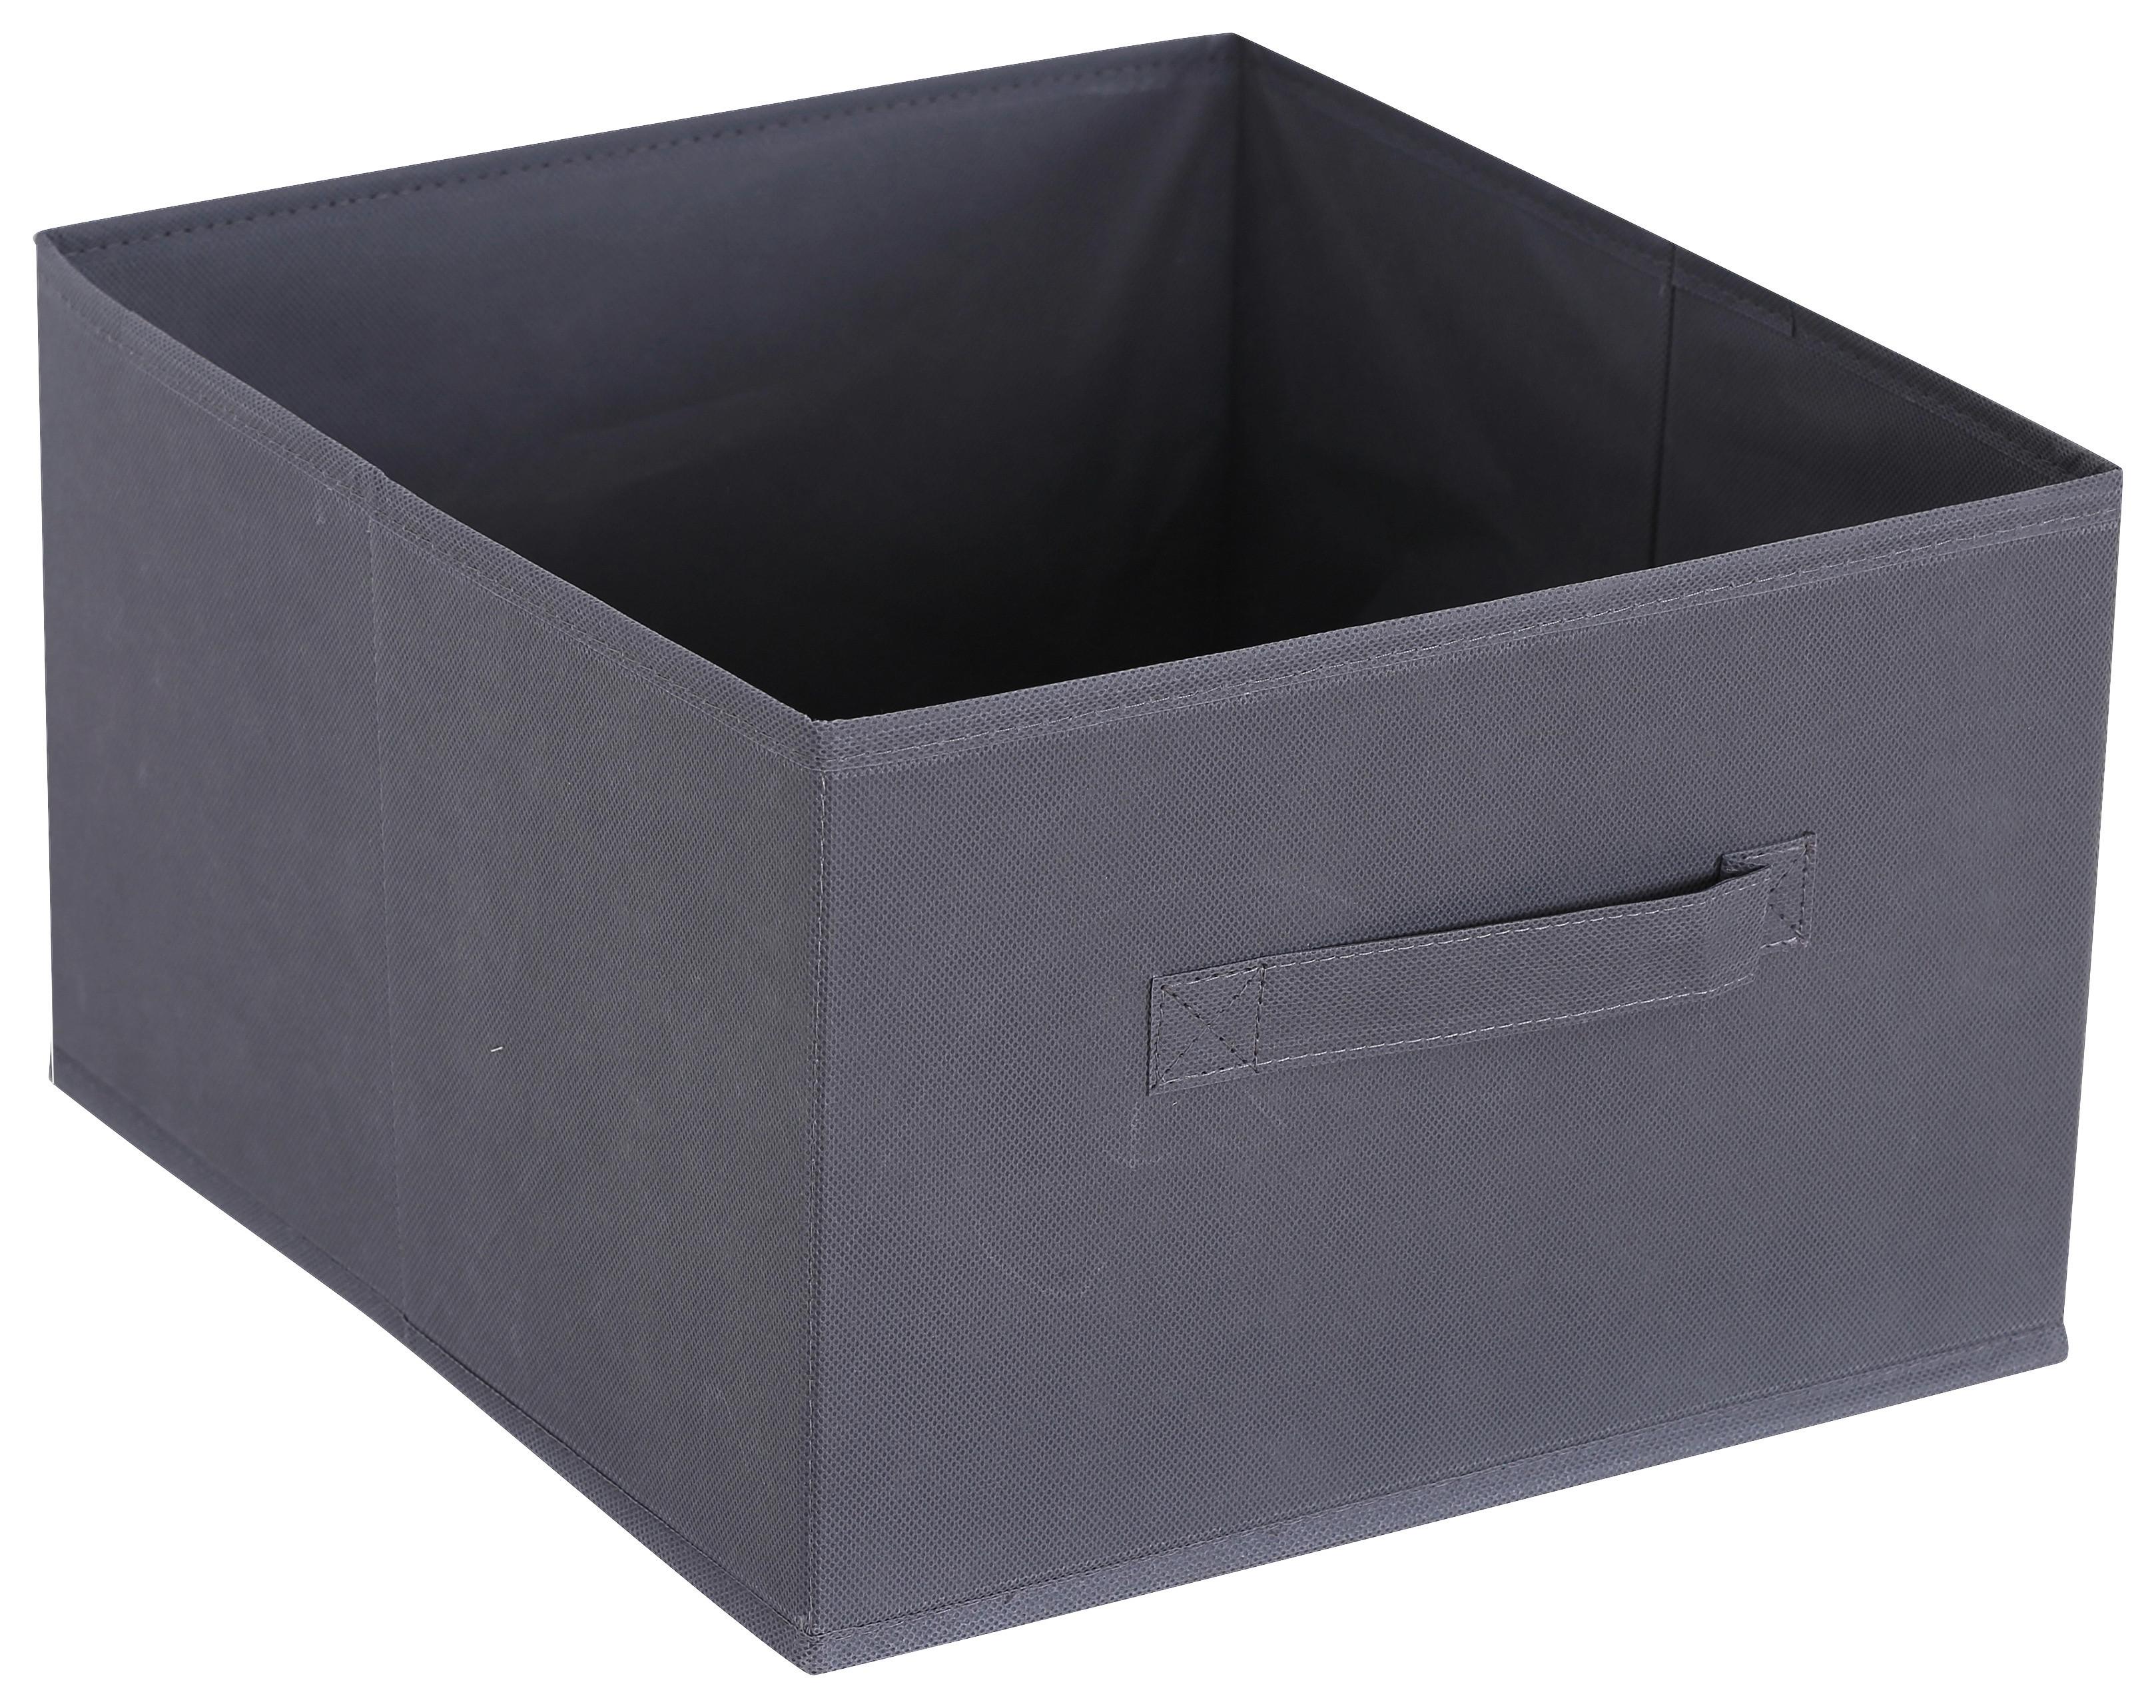 Aufbewahrungsbox Kläck in Grau - Grau, Konventionell, Karton/Textil (33,5/20/31cm) - Modern Living